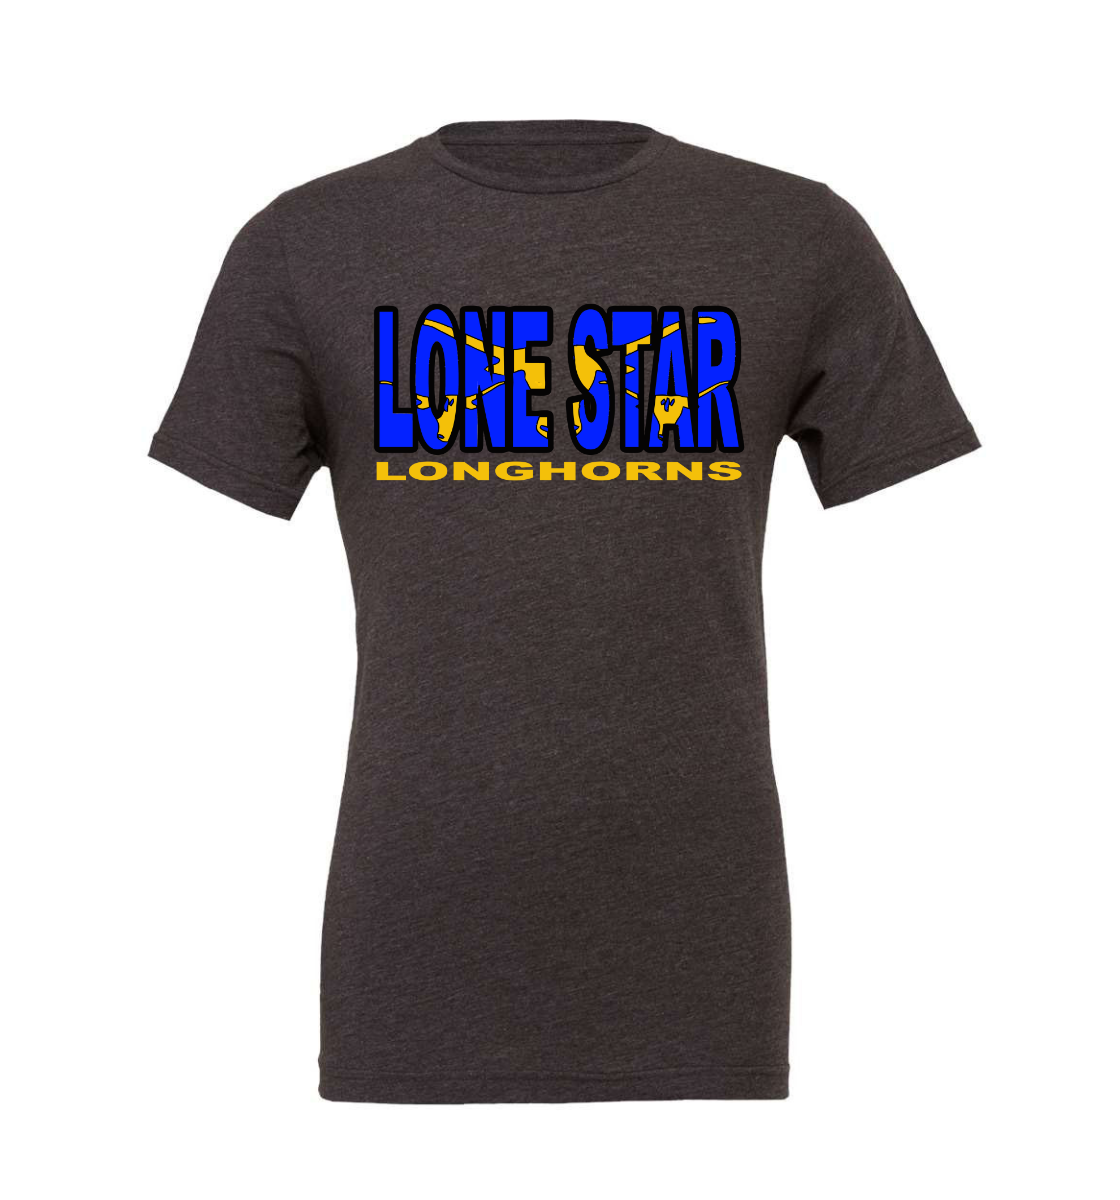 lone star longhorns t-shirt: for longhorns fans only!